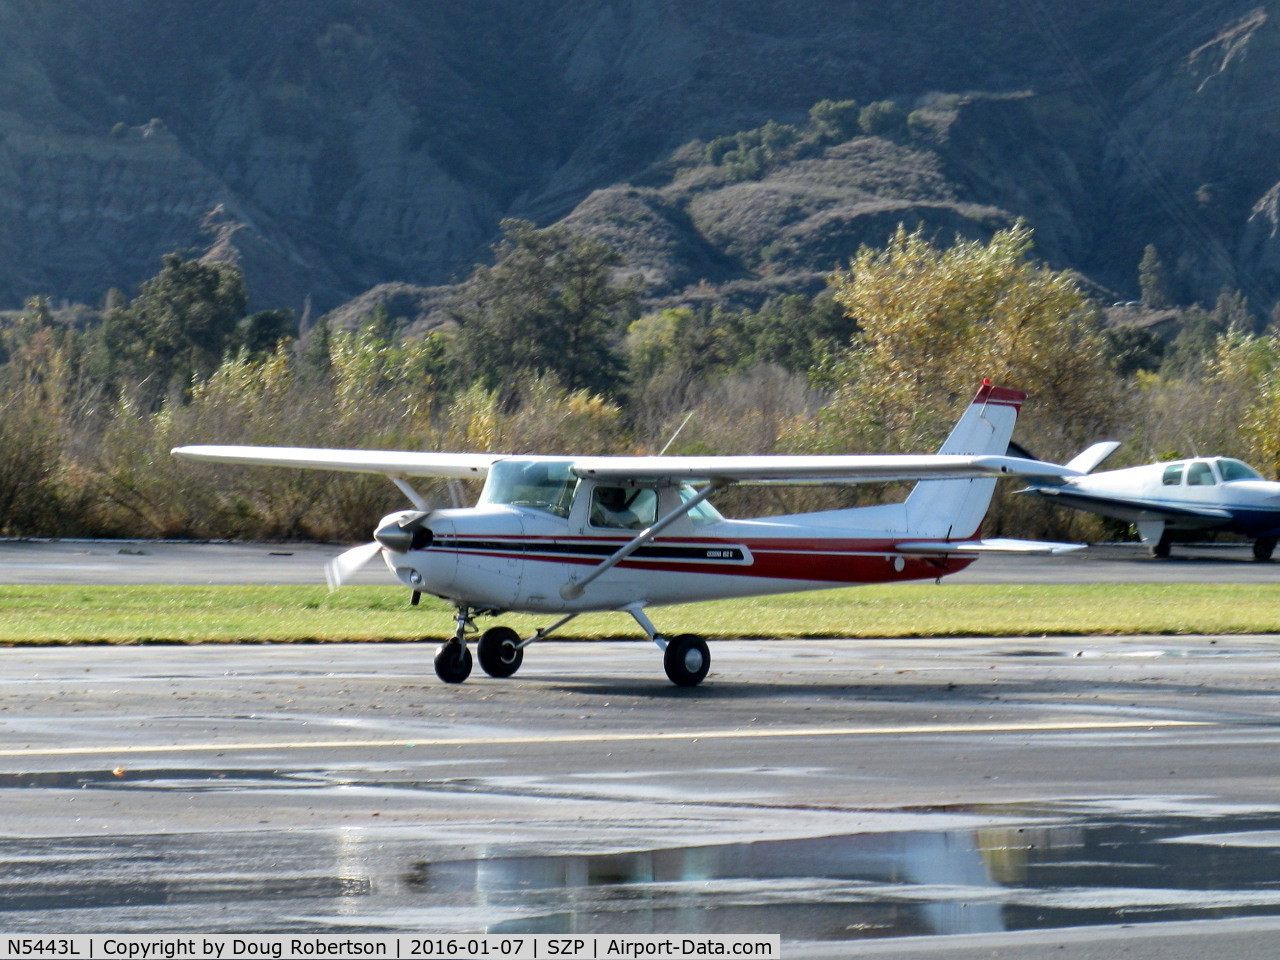 N5443L, 1980 Cessna 152 C/N 15284315, 1980 Cessna 152, Lycoming O-235 115 Hp, landing roll Rwy 04